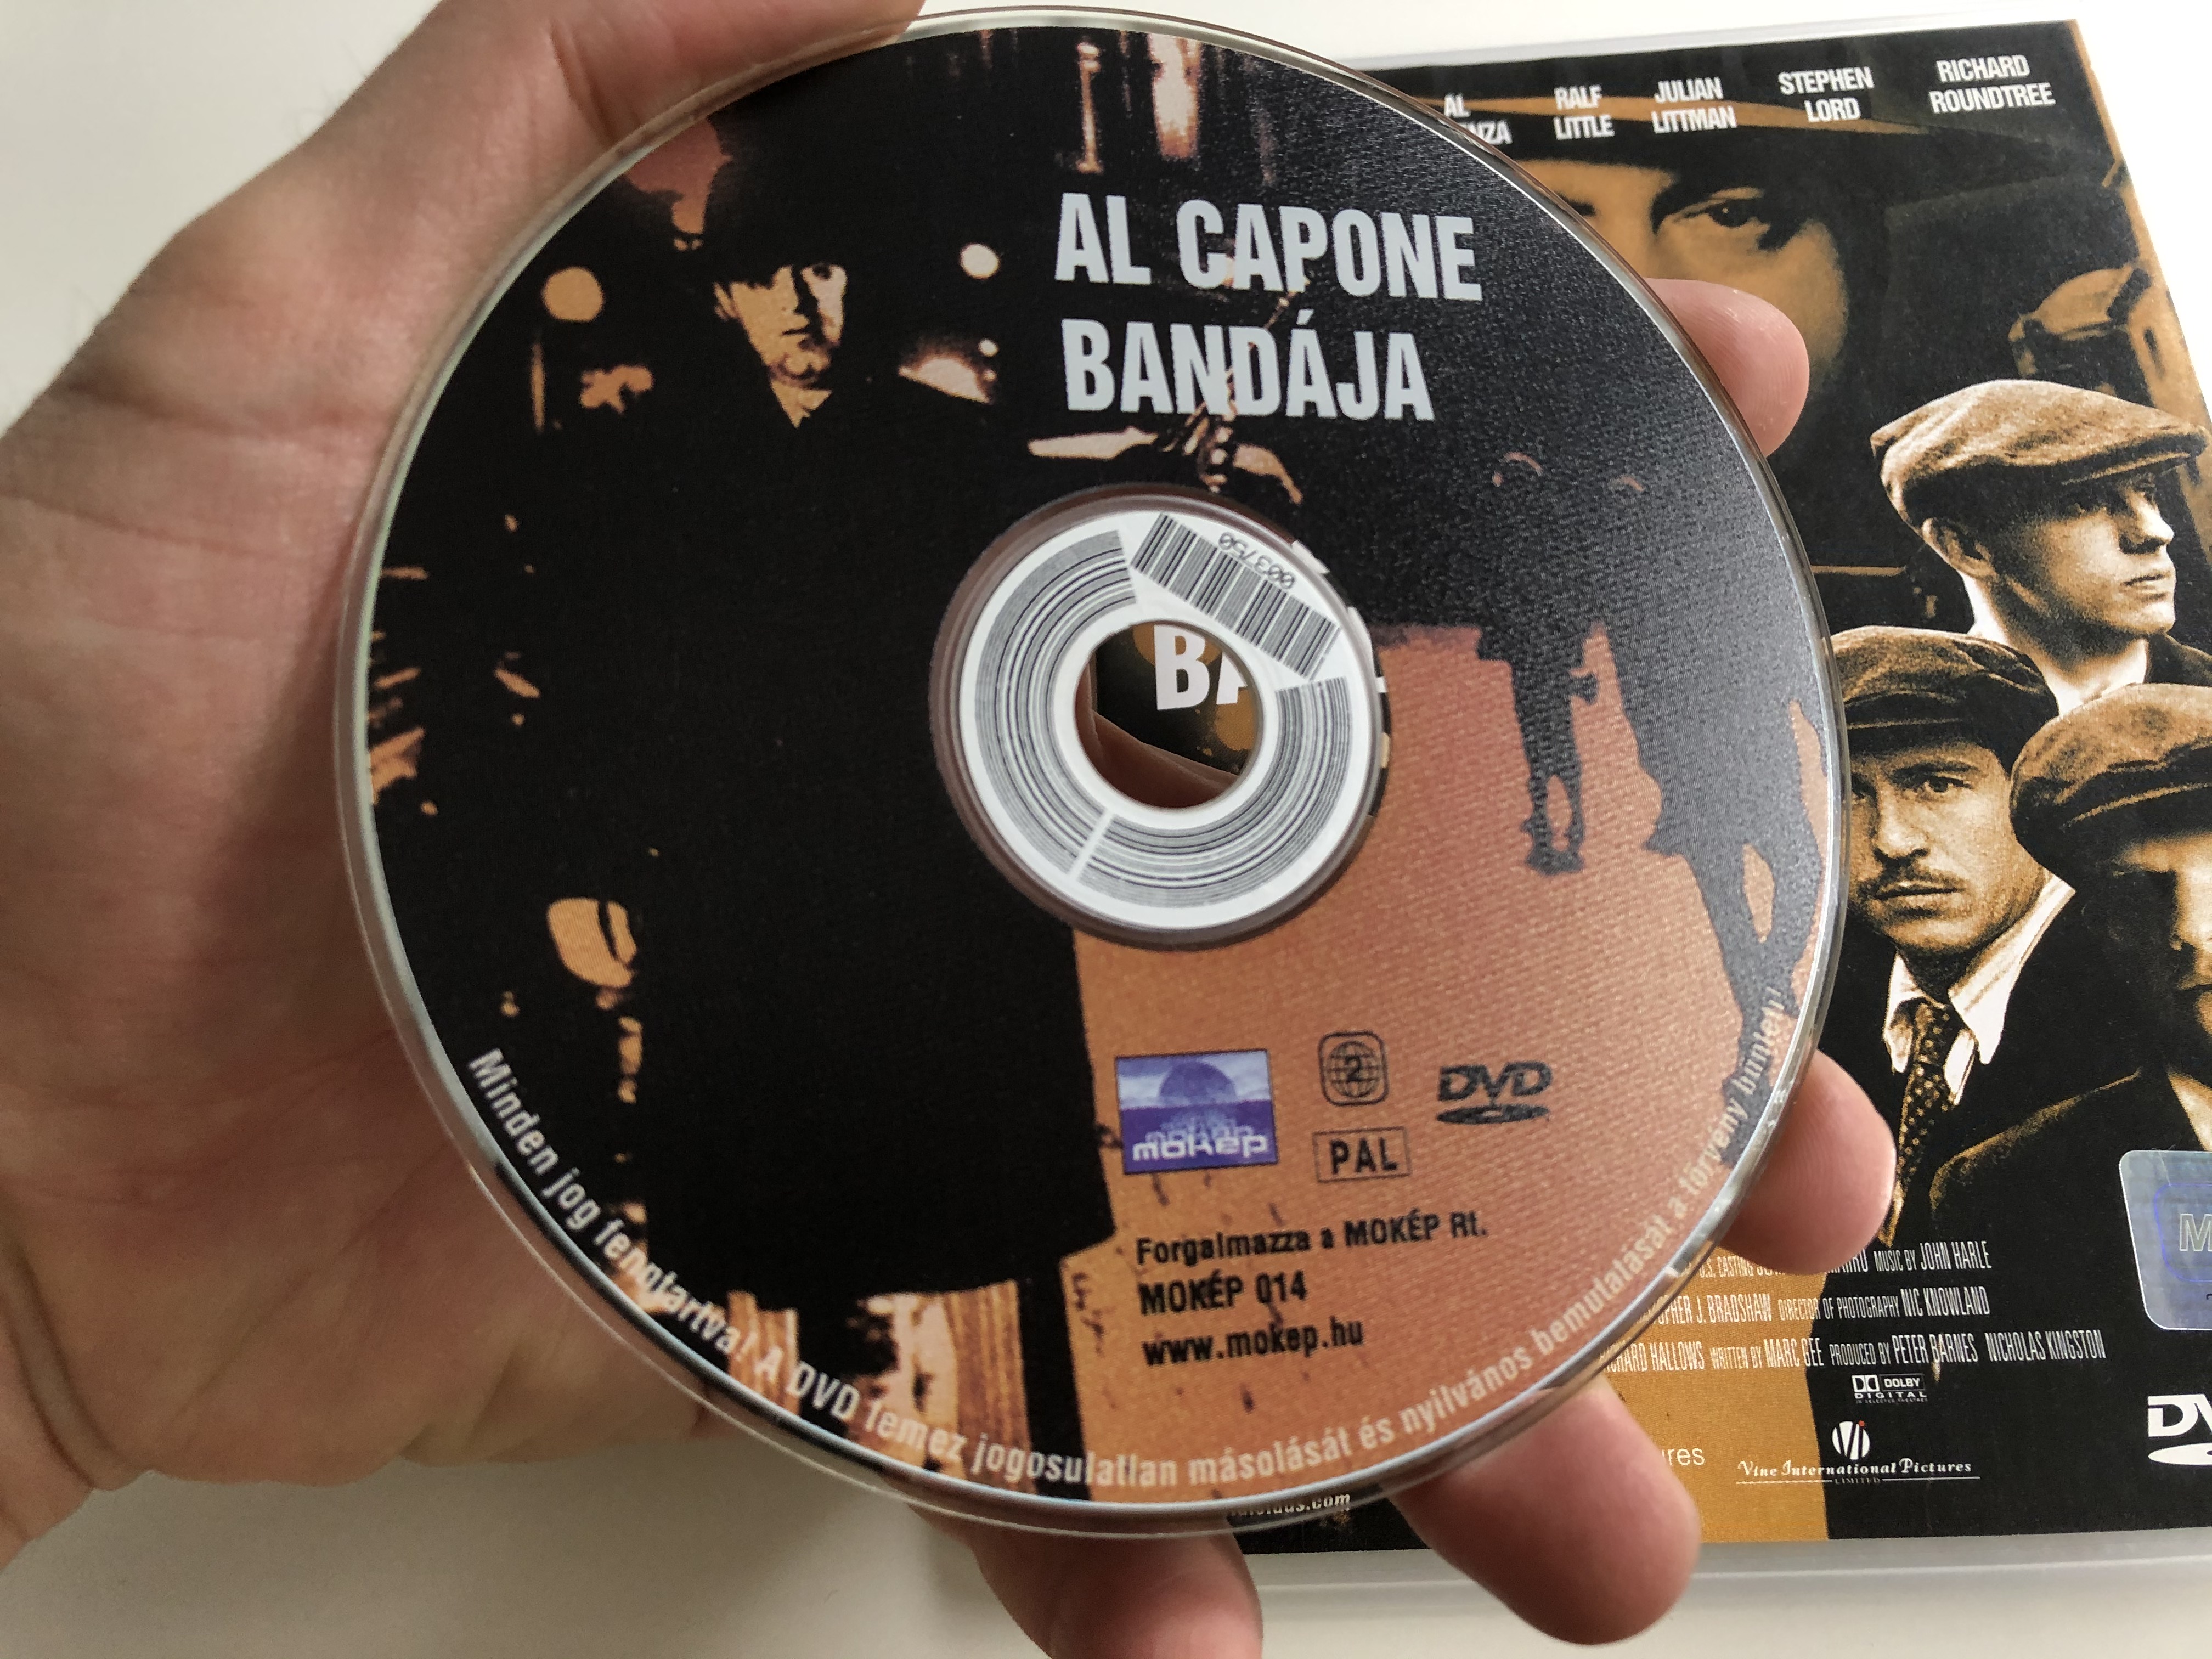 al-s-lads-dvd-2002-al-capone-band-ja-aka-capone-s-boys-2.jpg